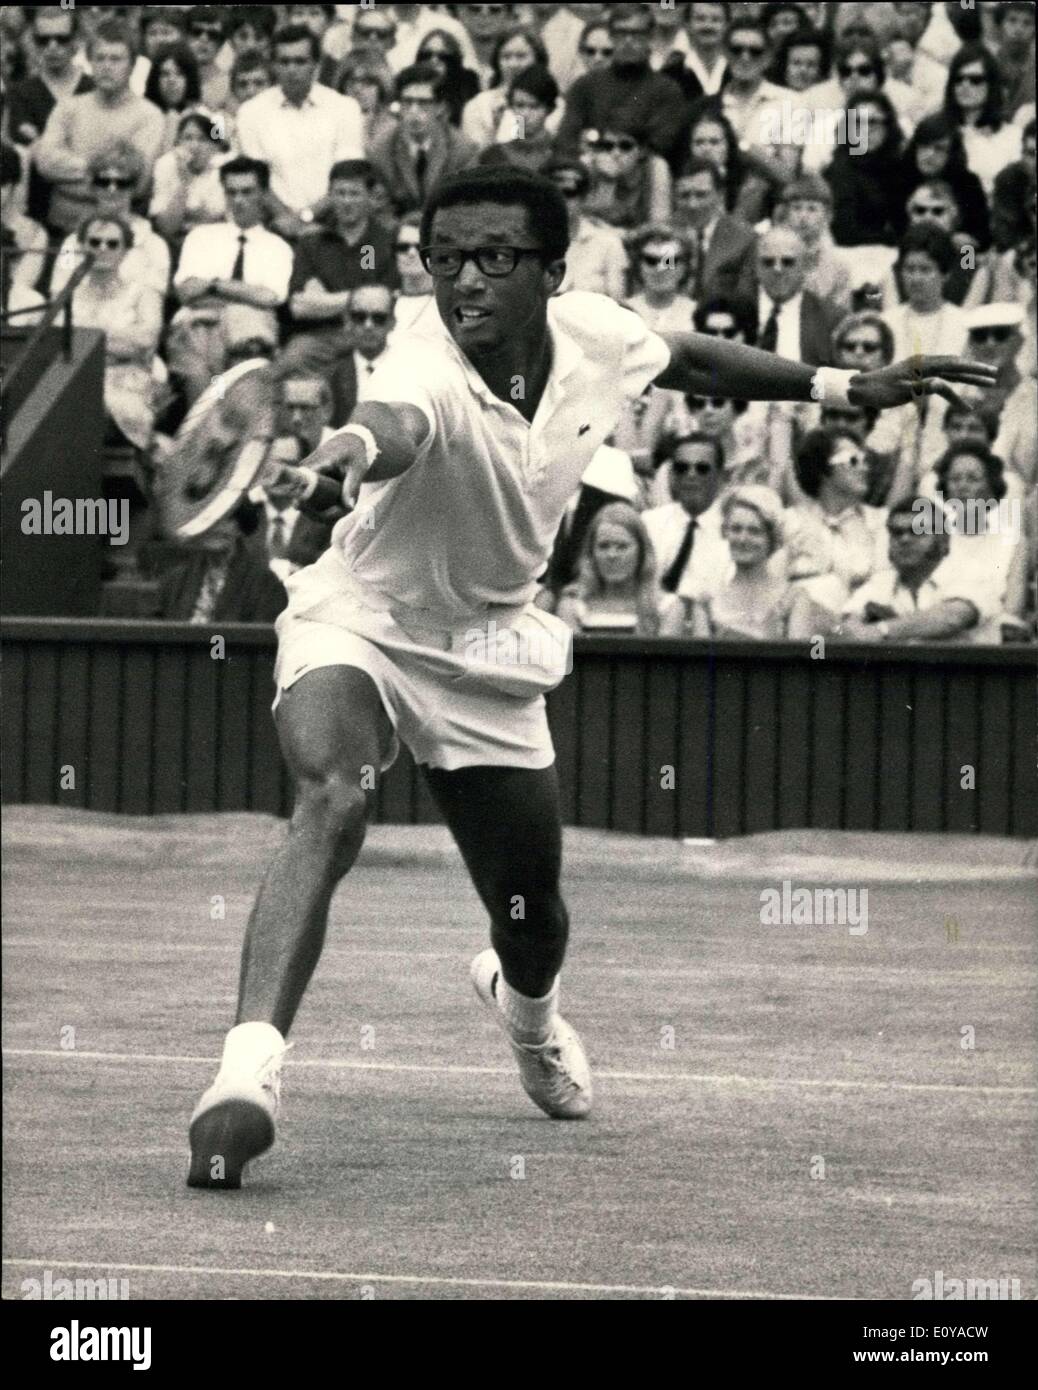 Jun. 28, 1969 - WIMBLEDON TENNIS CHAMPIONSHIPS ASHE USA VERSUS GONZALES USA : Gonzales was knocked out of the Wimbledon tourn Stock Photo